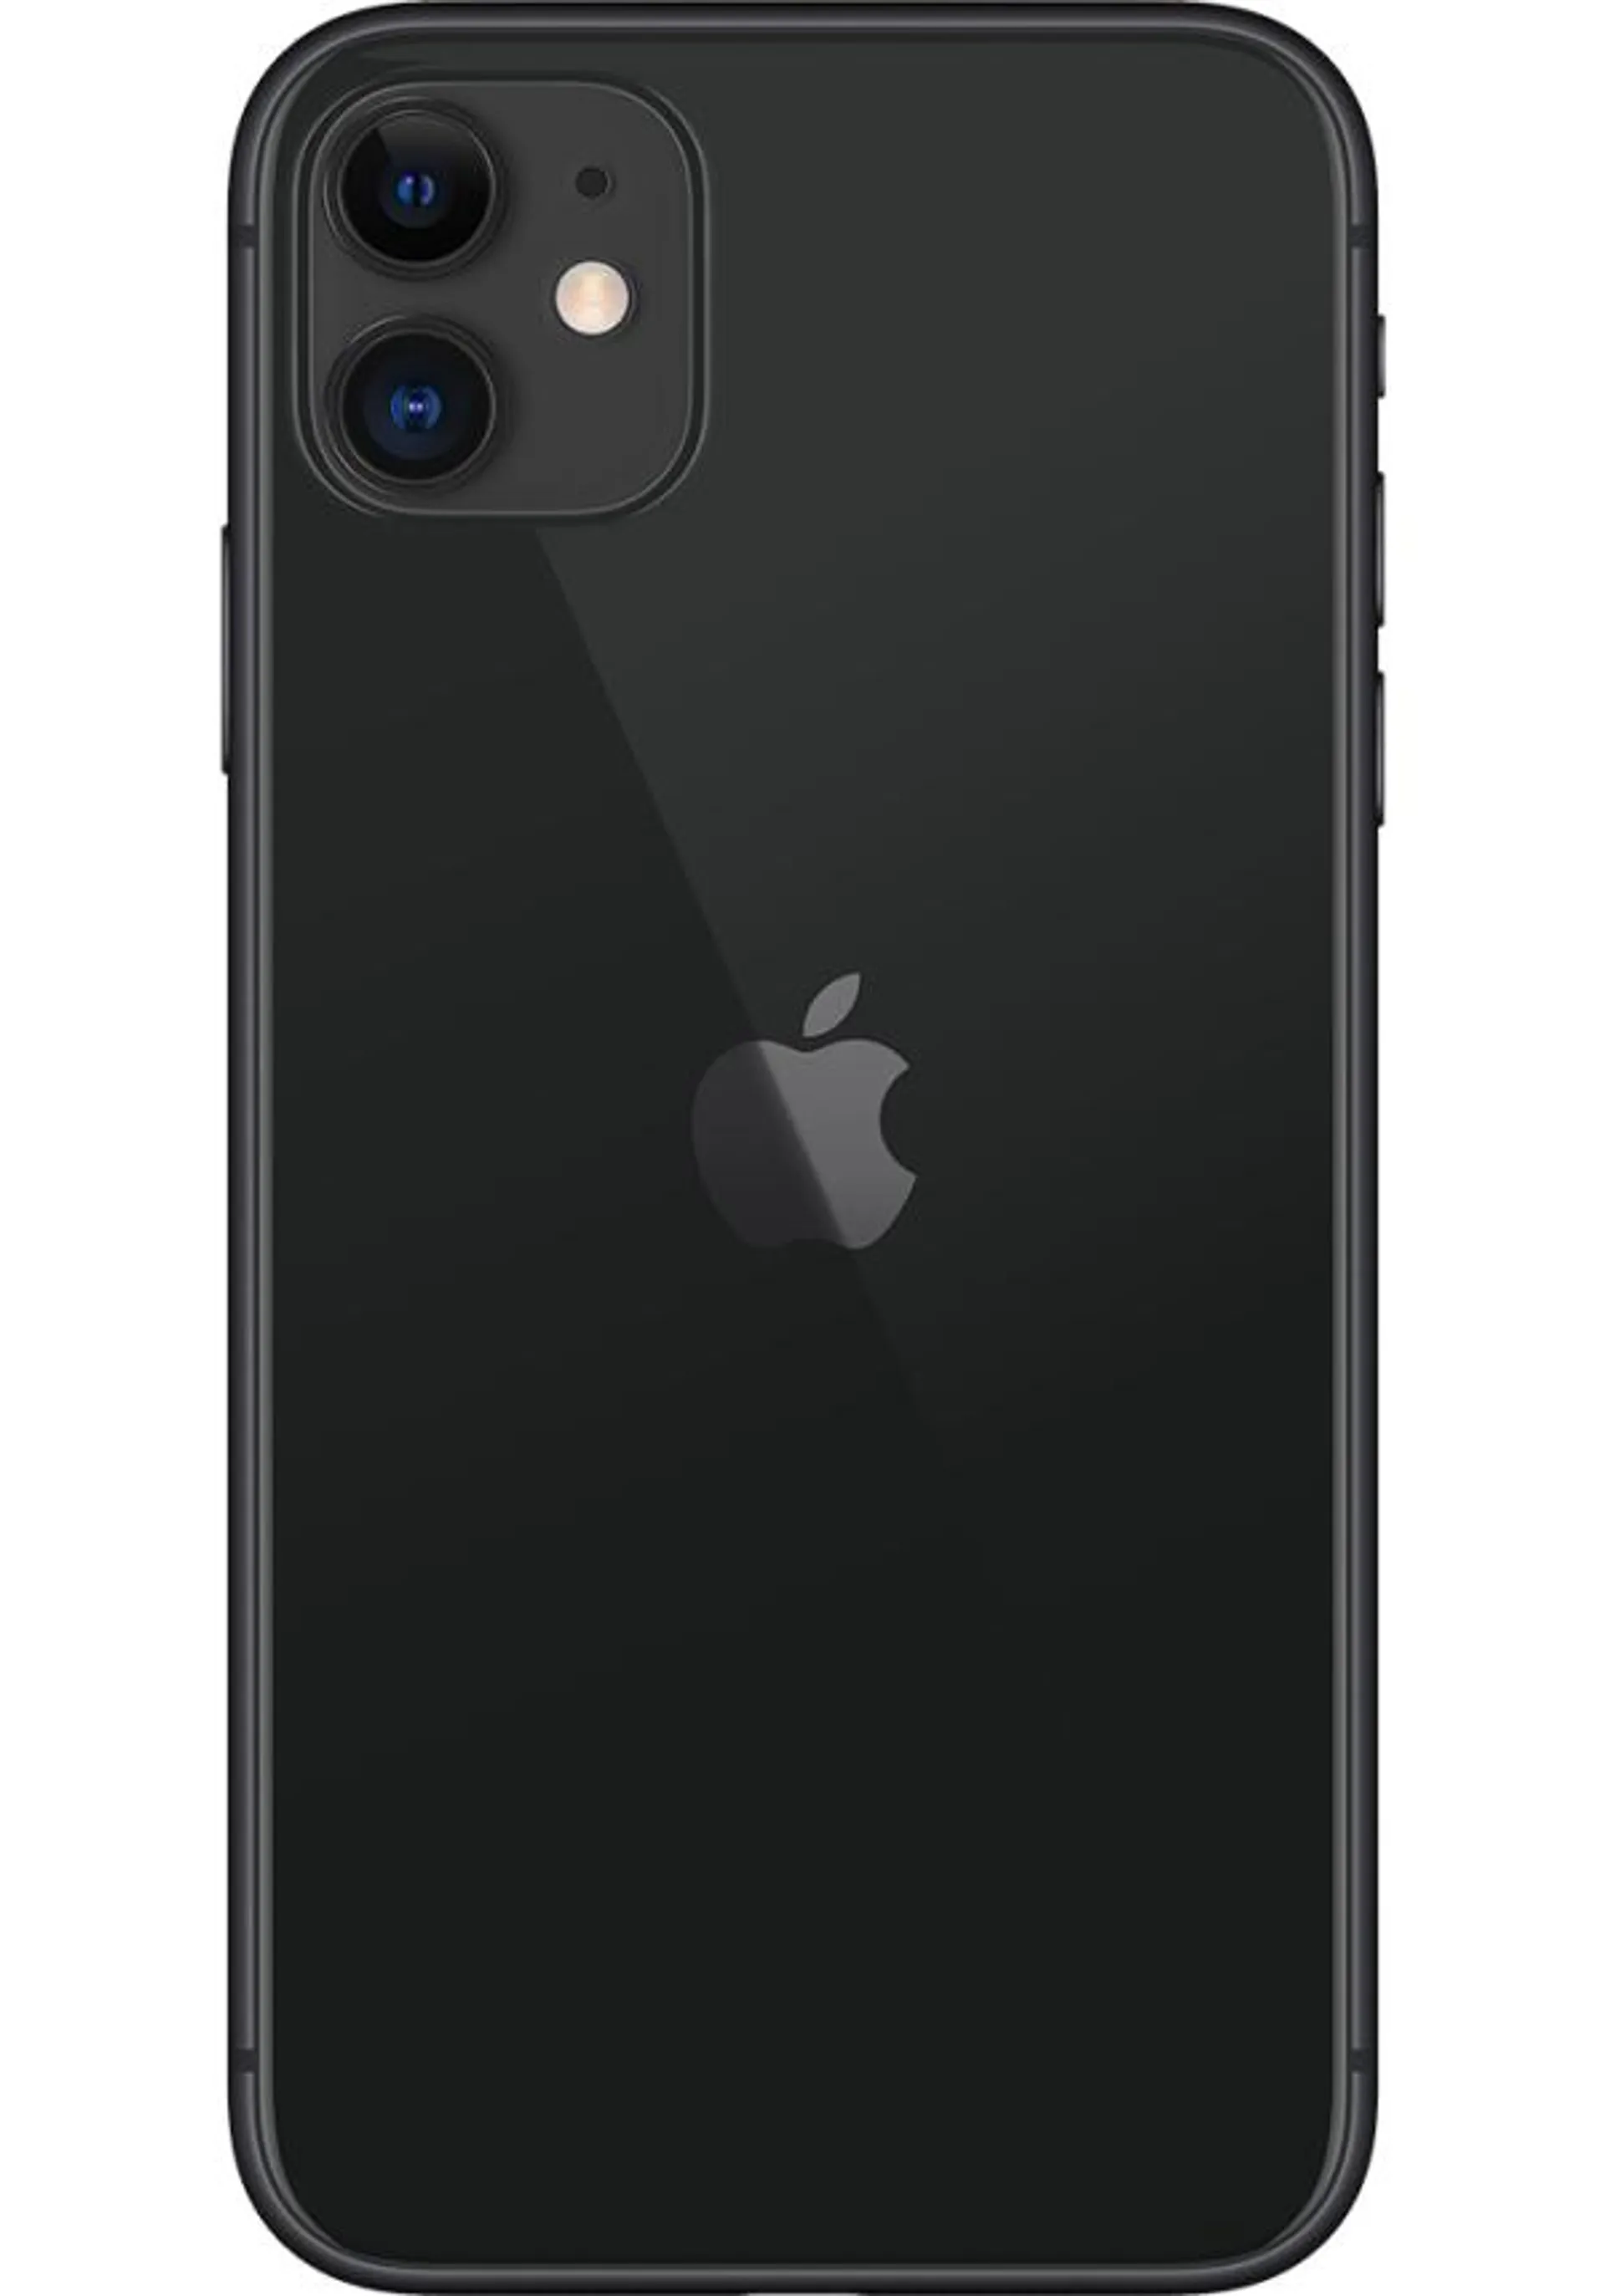 Apple iPhone 11 Very Good Black 64GB Refurbished